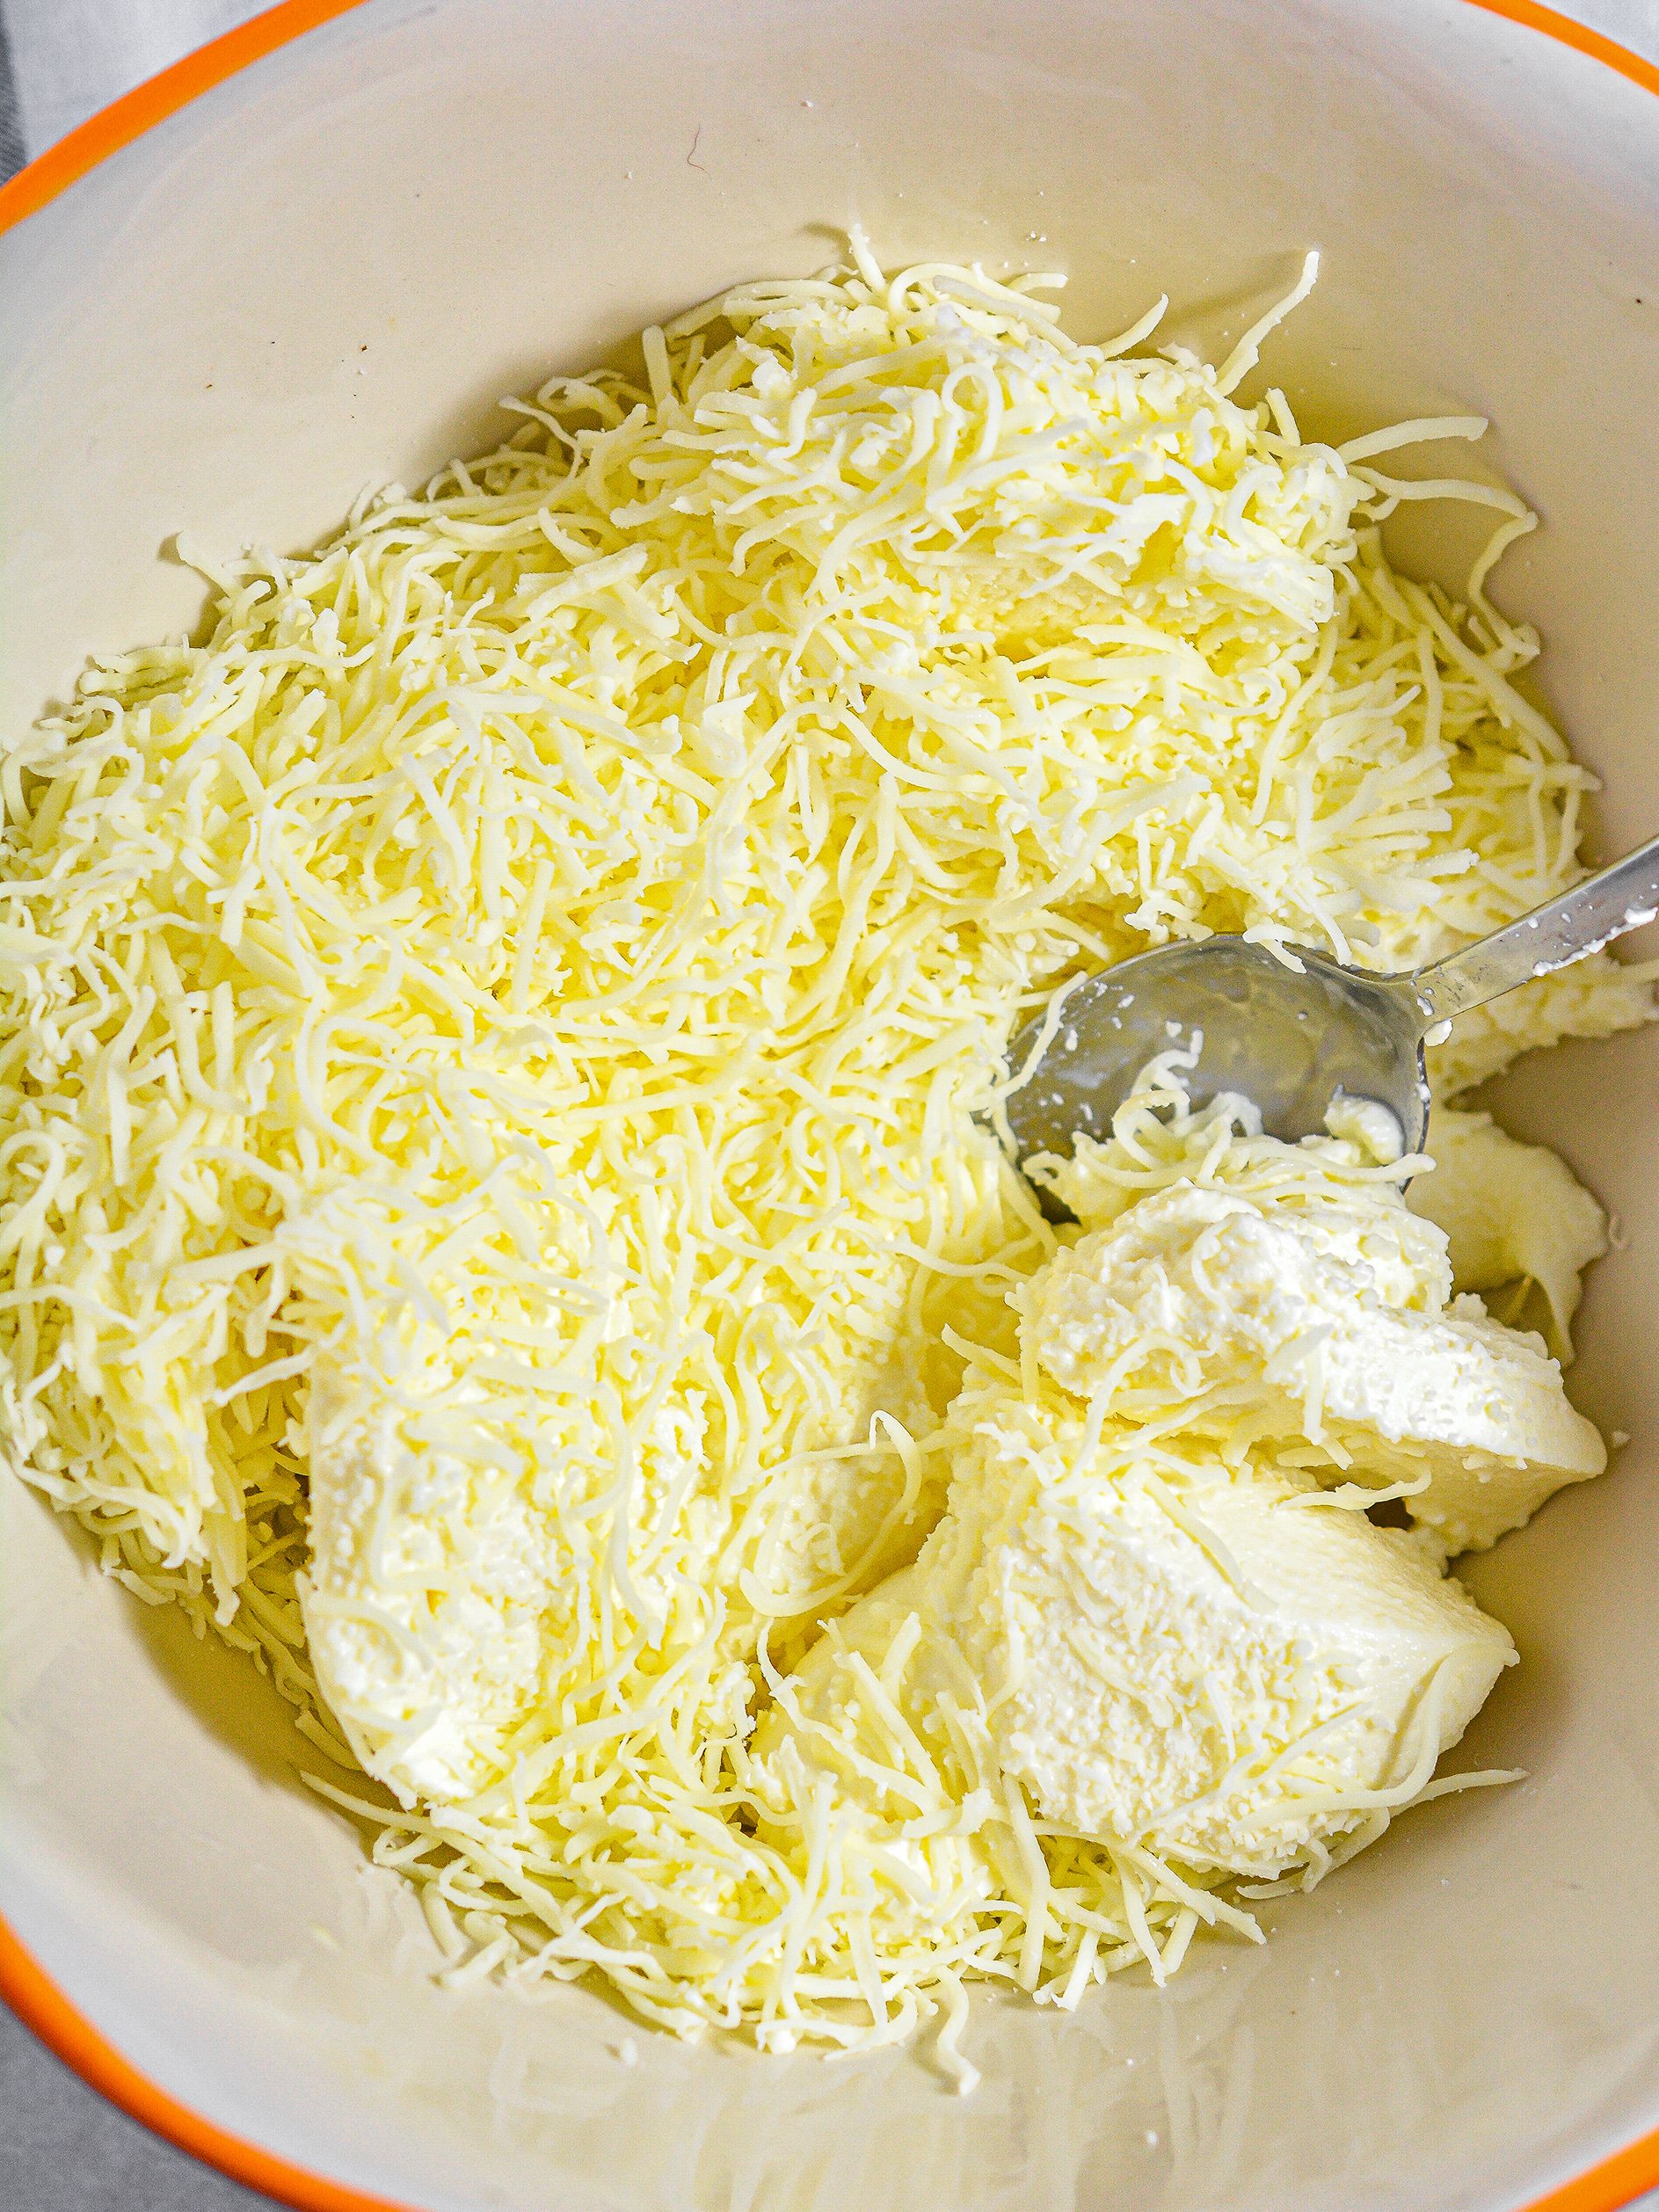 Adding the ricotta cheese and the mozzarella cheese.